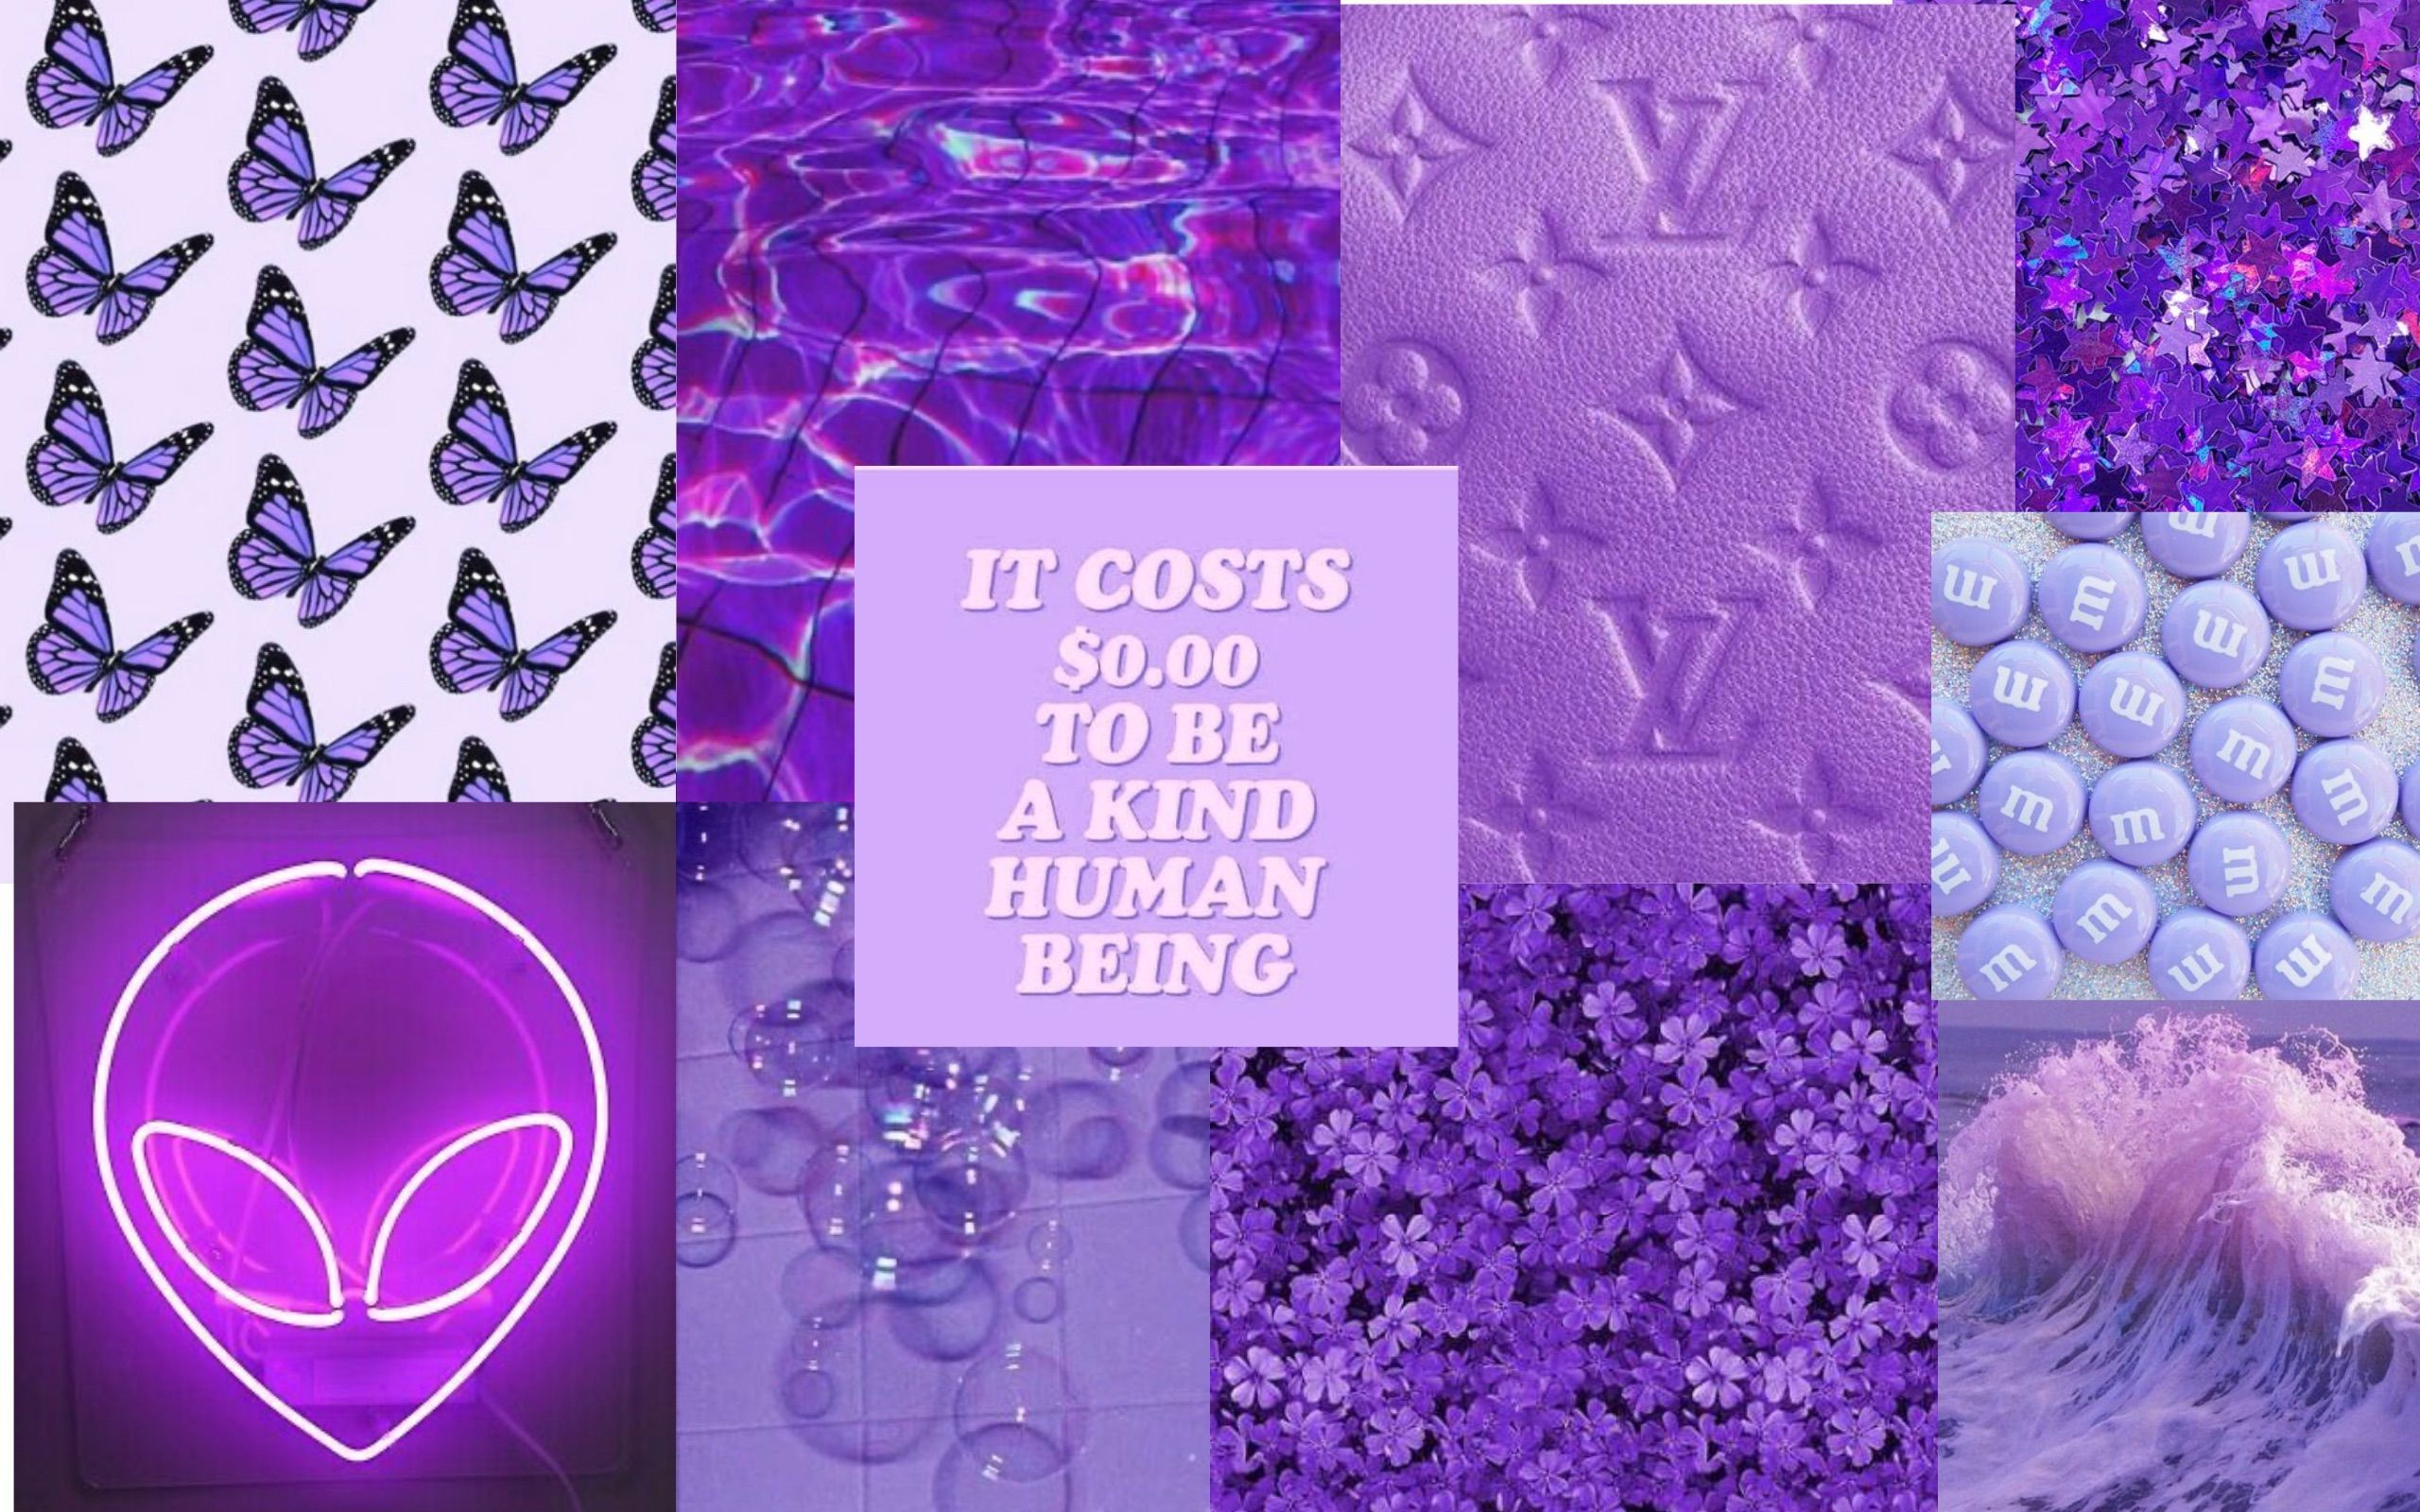 plain purple wallpaper aesthetic